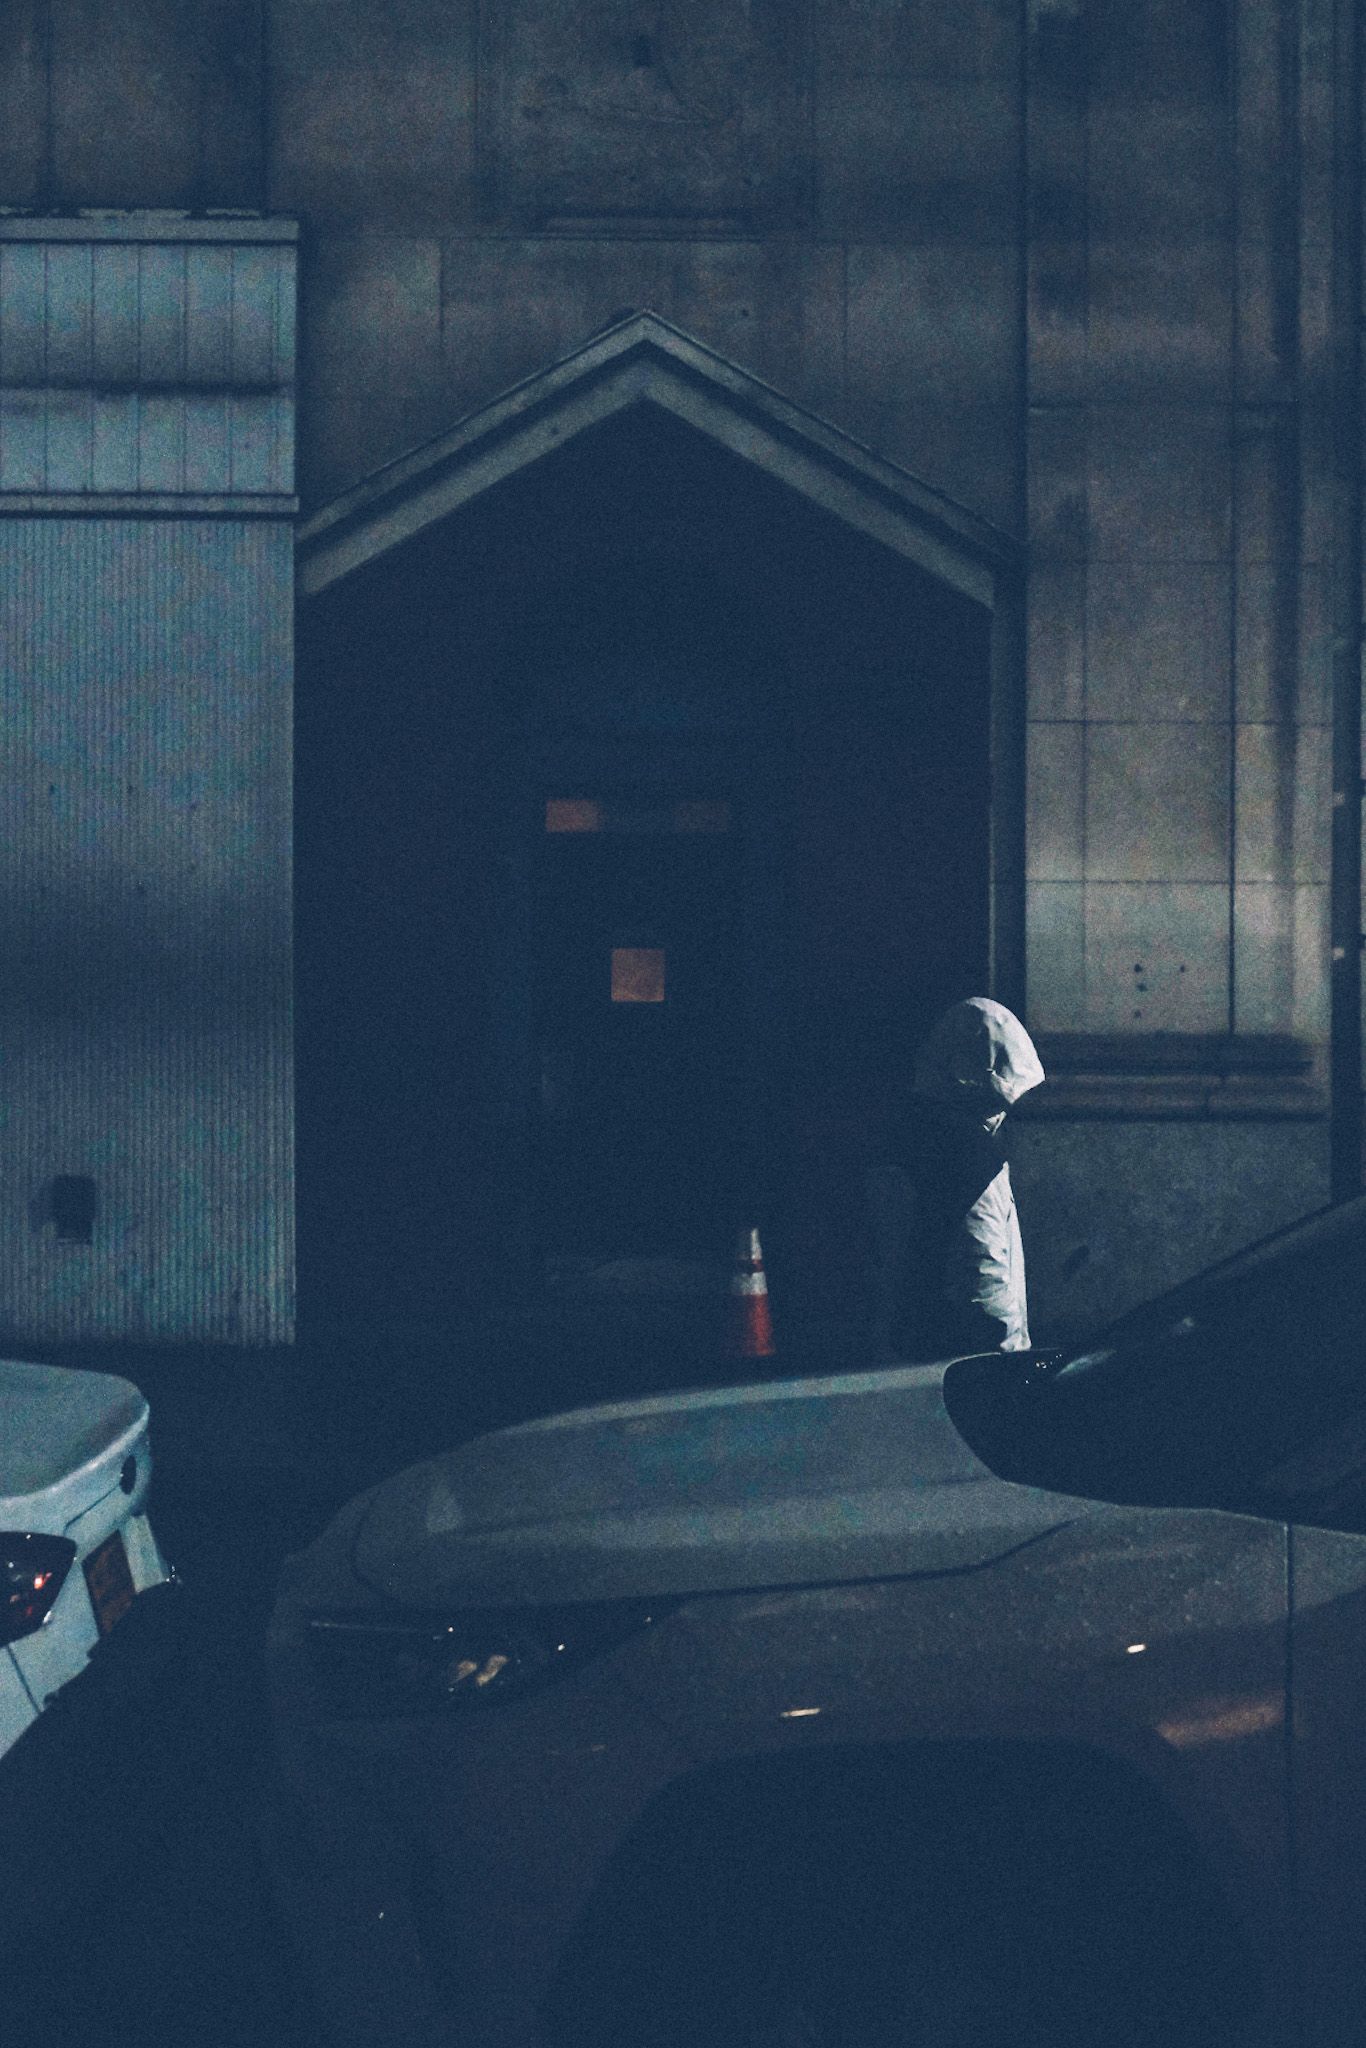 At night, a hooded figure walks past a darkened doorway.